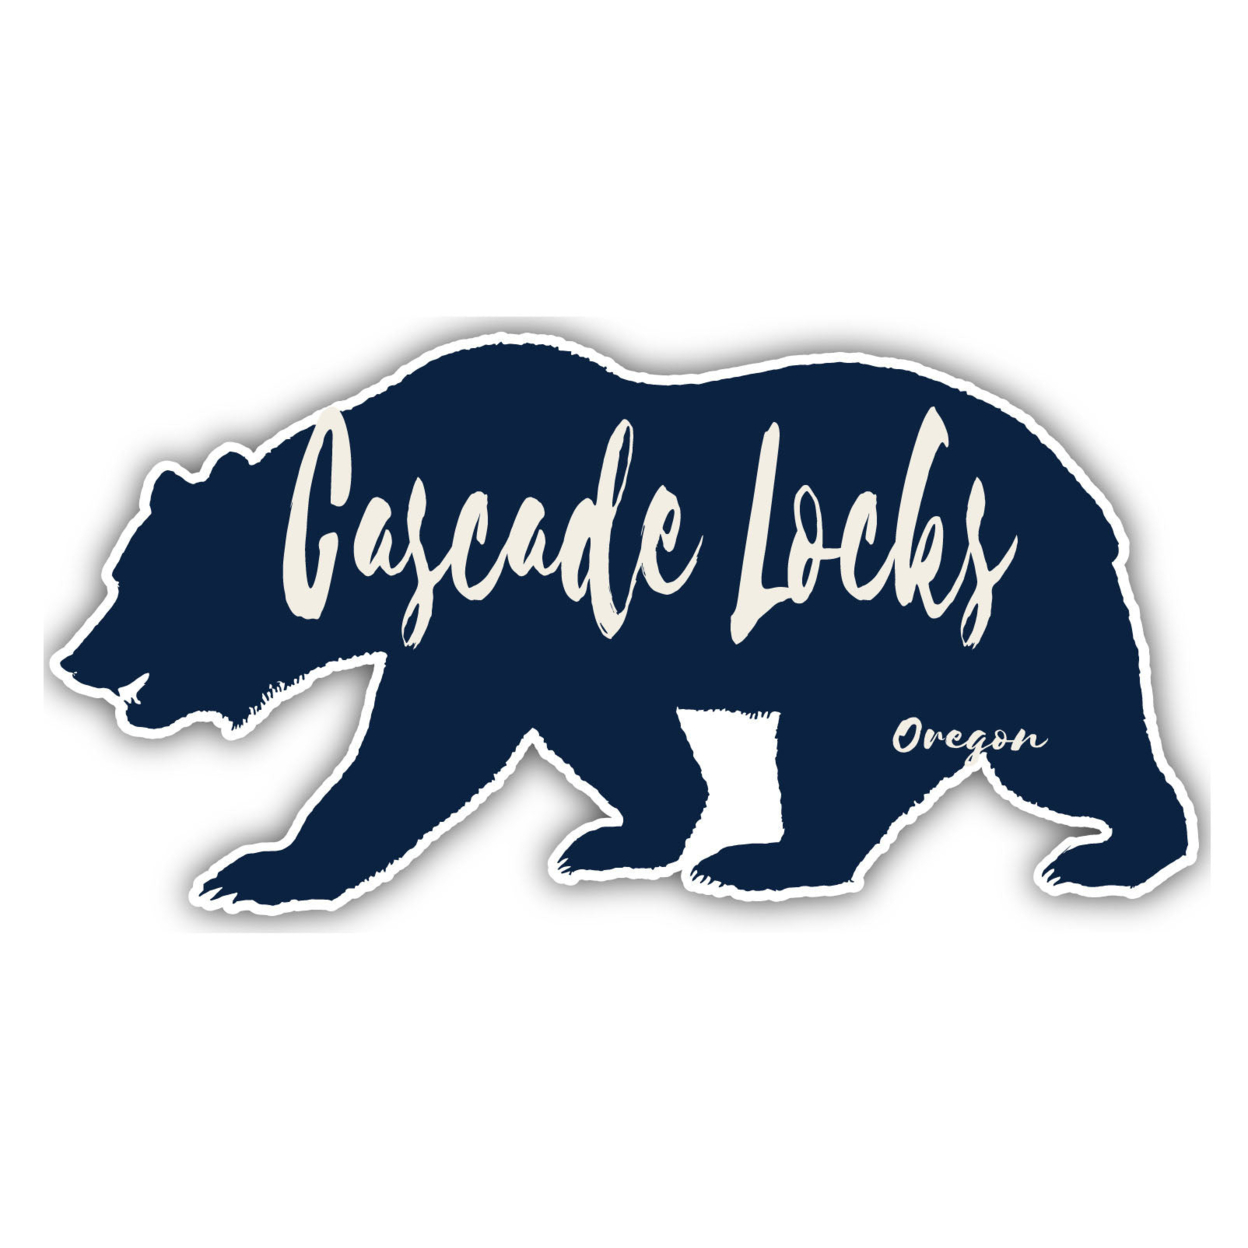 Cascade Locks Oregon Souvenir Decorative Stickers (Choose Theme And Size) - Single Unit, 8-Inch, Tent